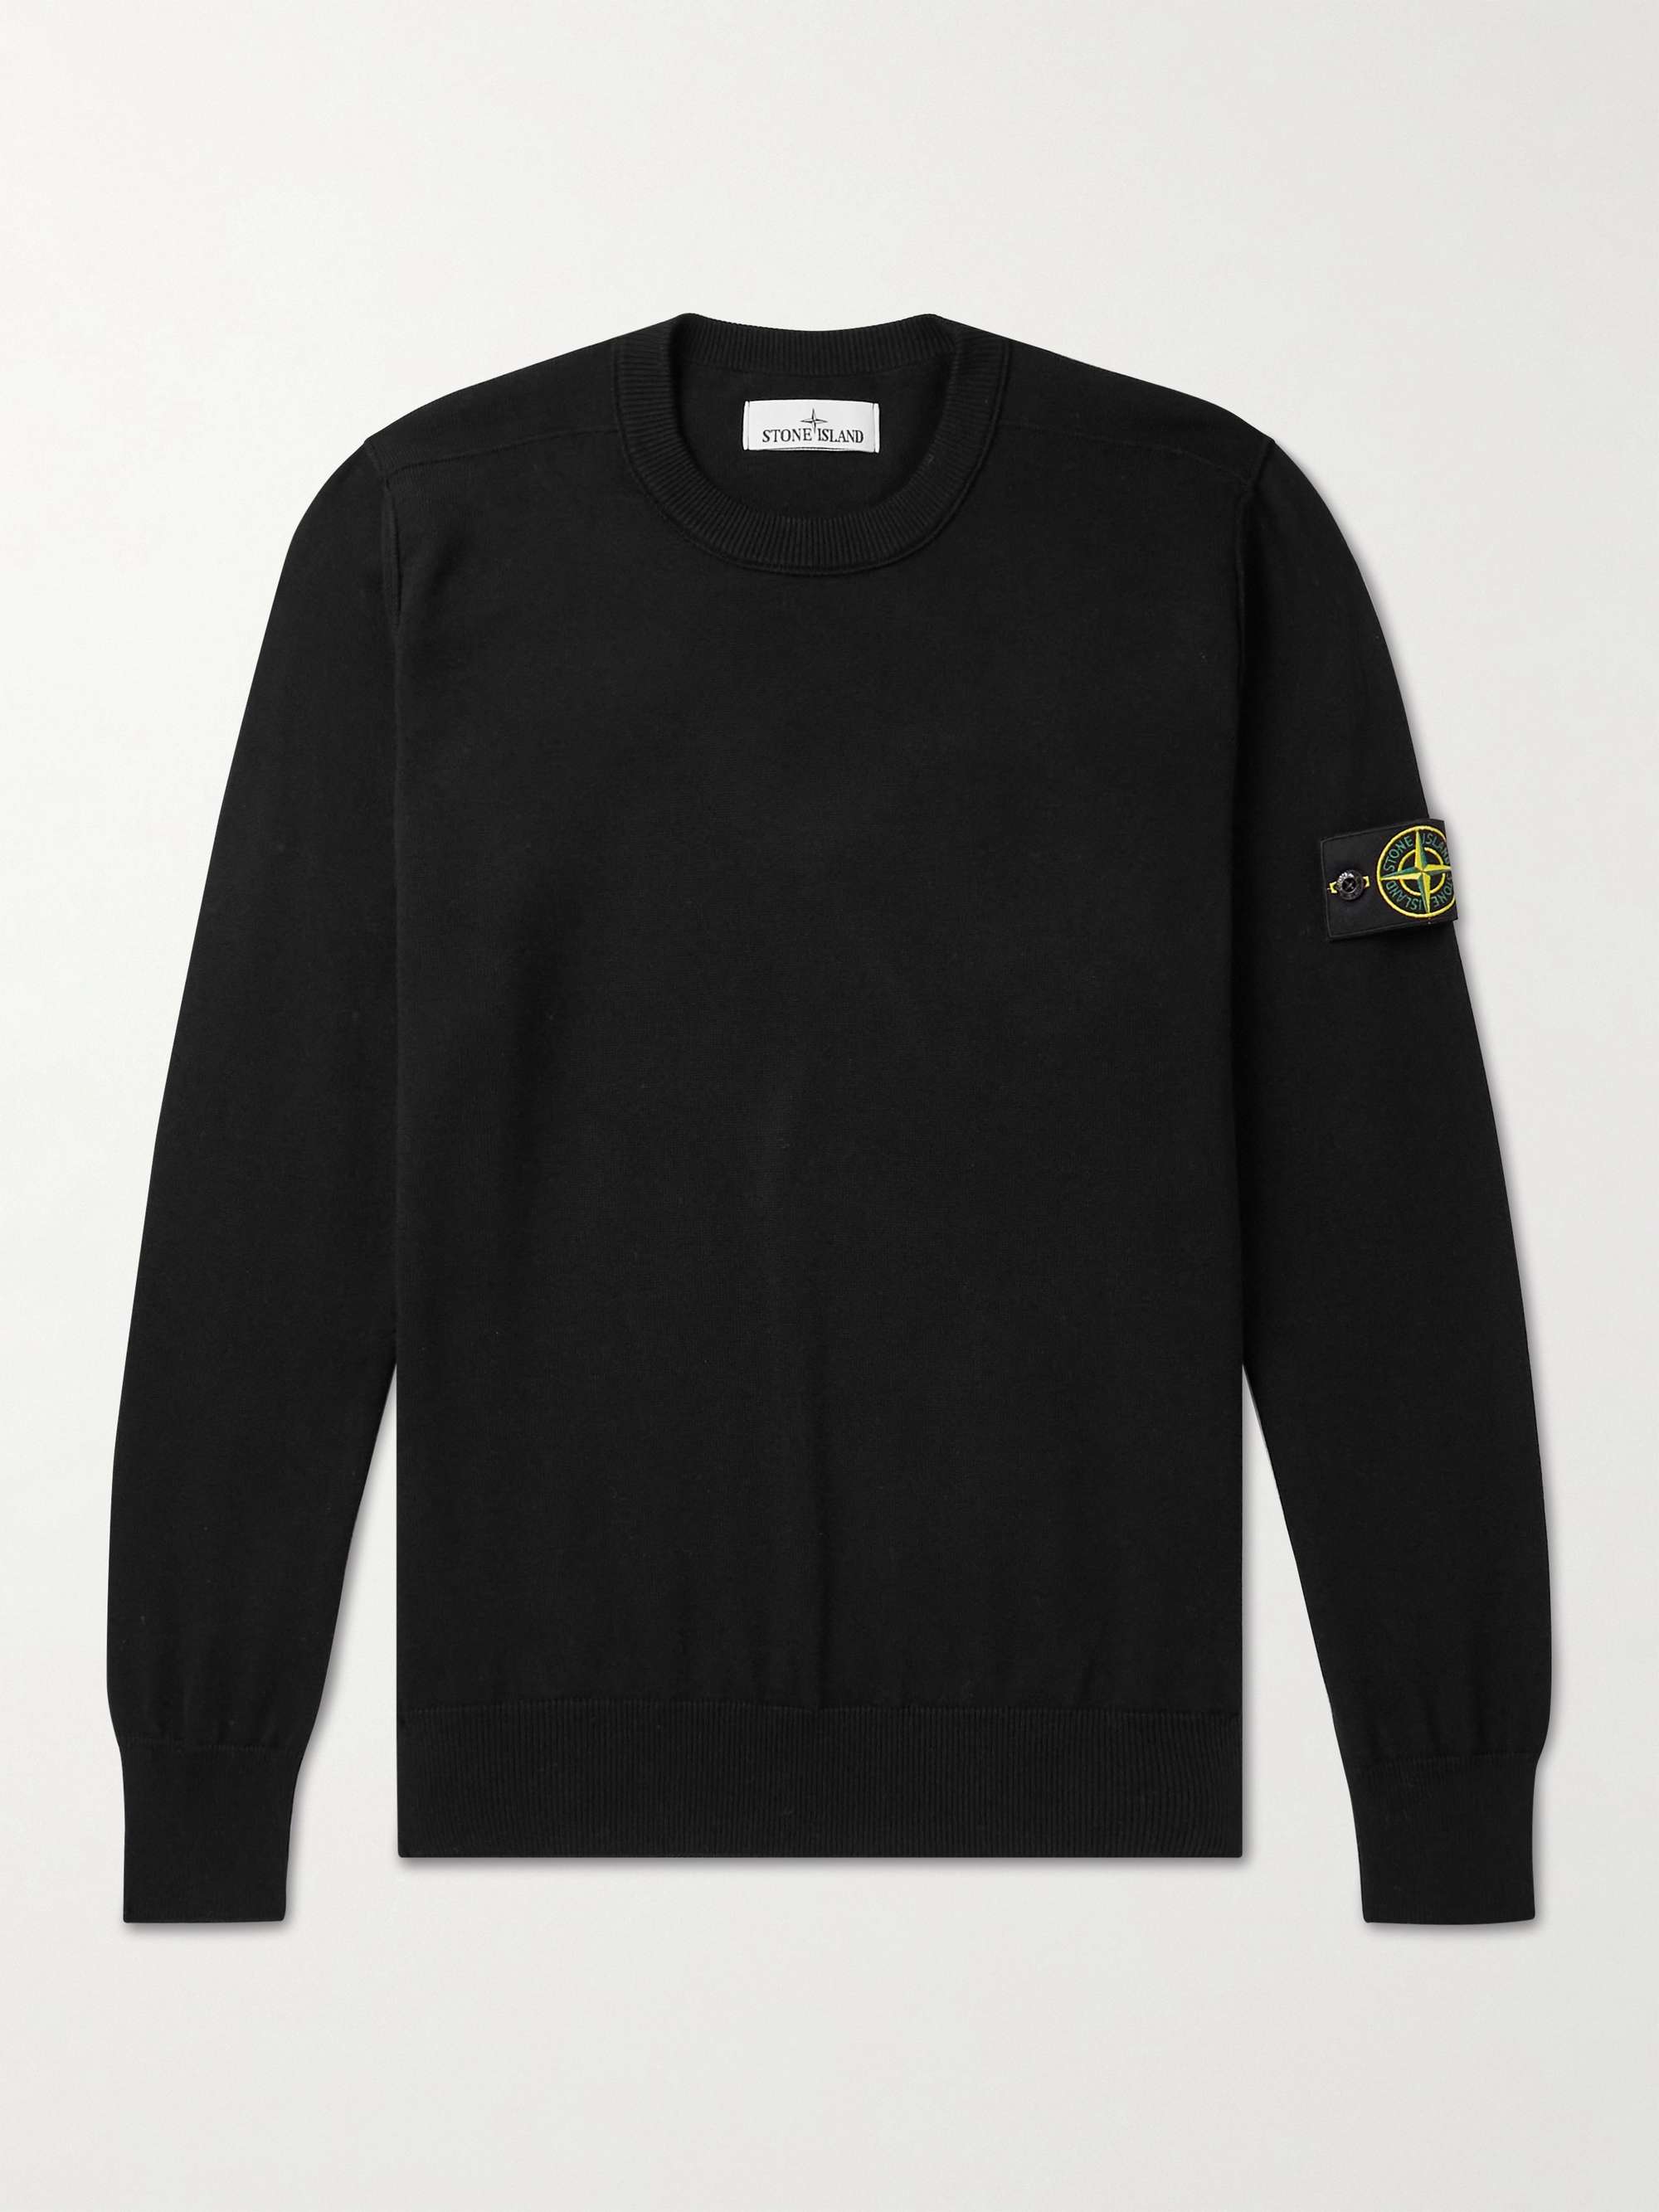 STONE ISLAND Logo-Appliqued Cotton Sweater,Black